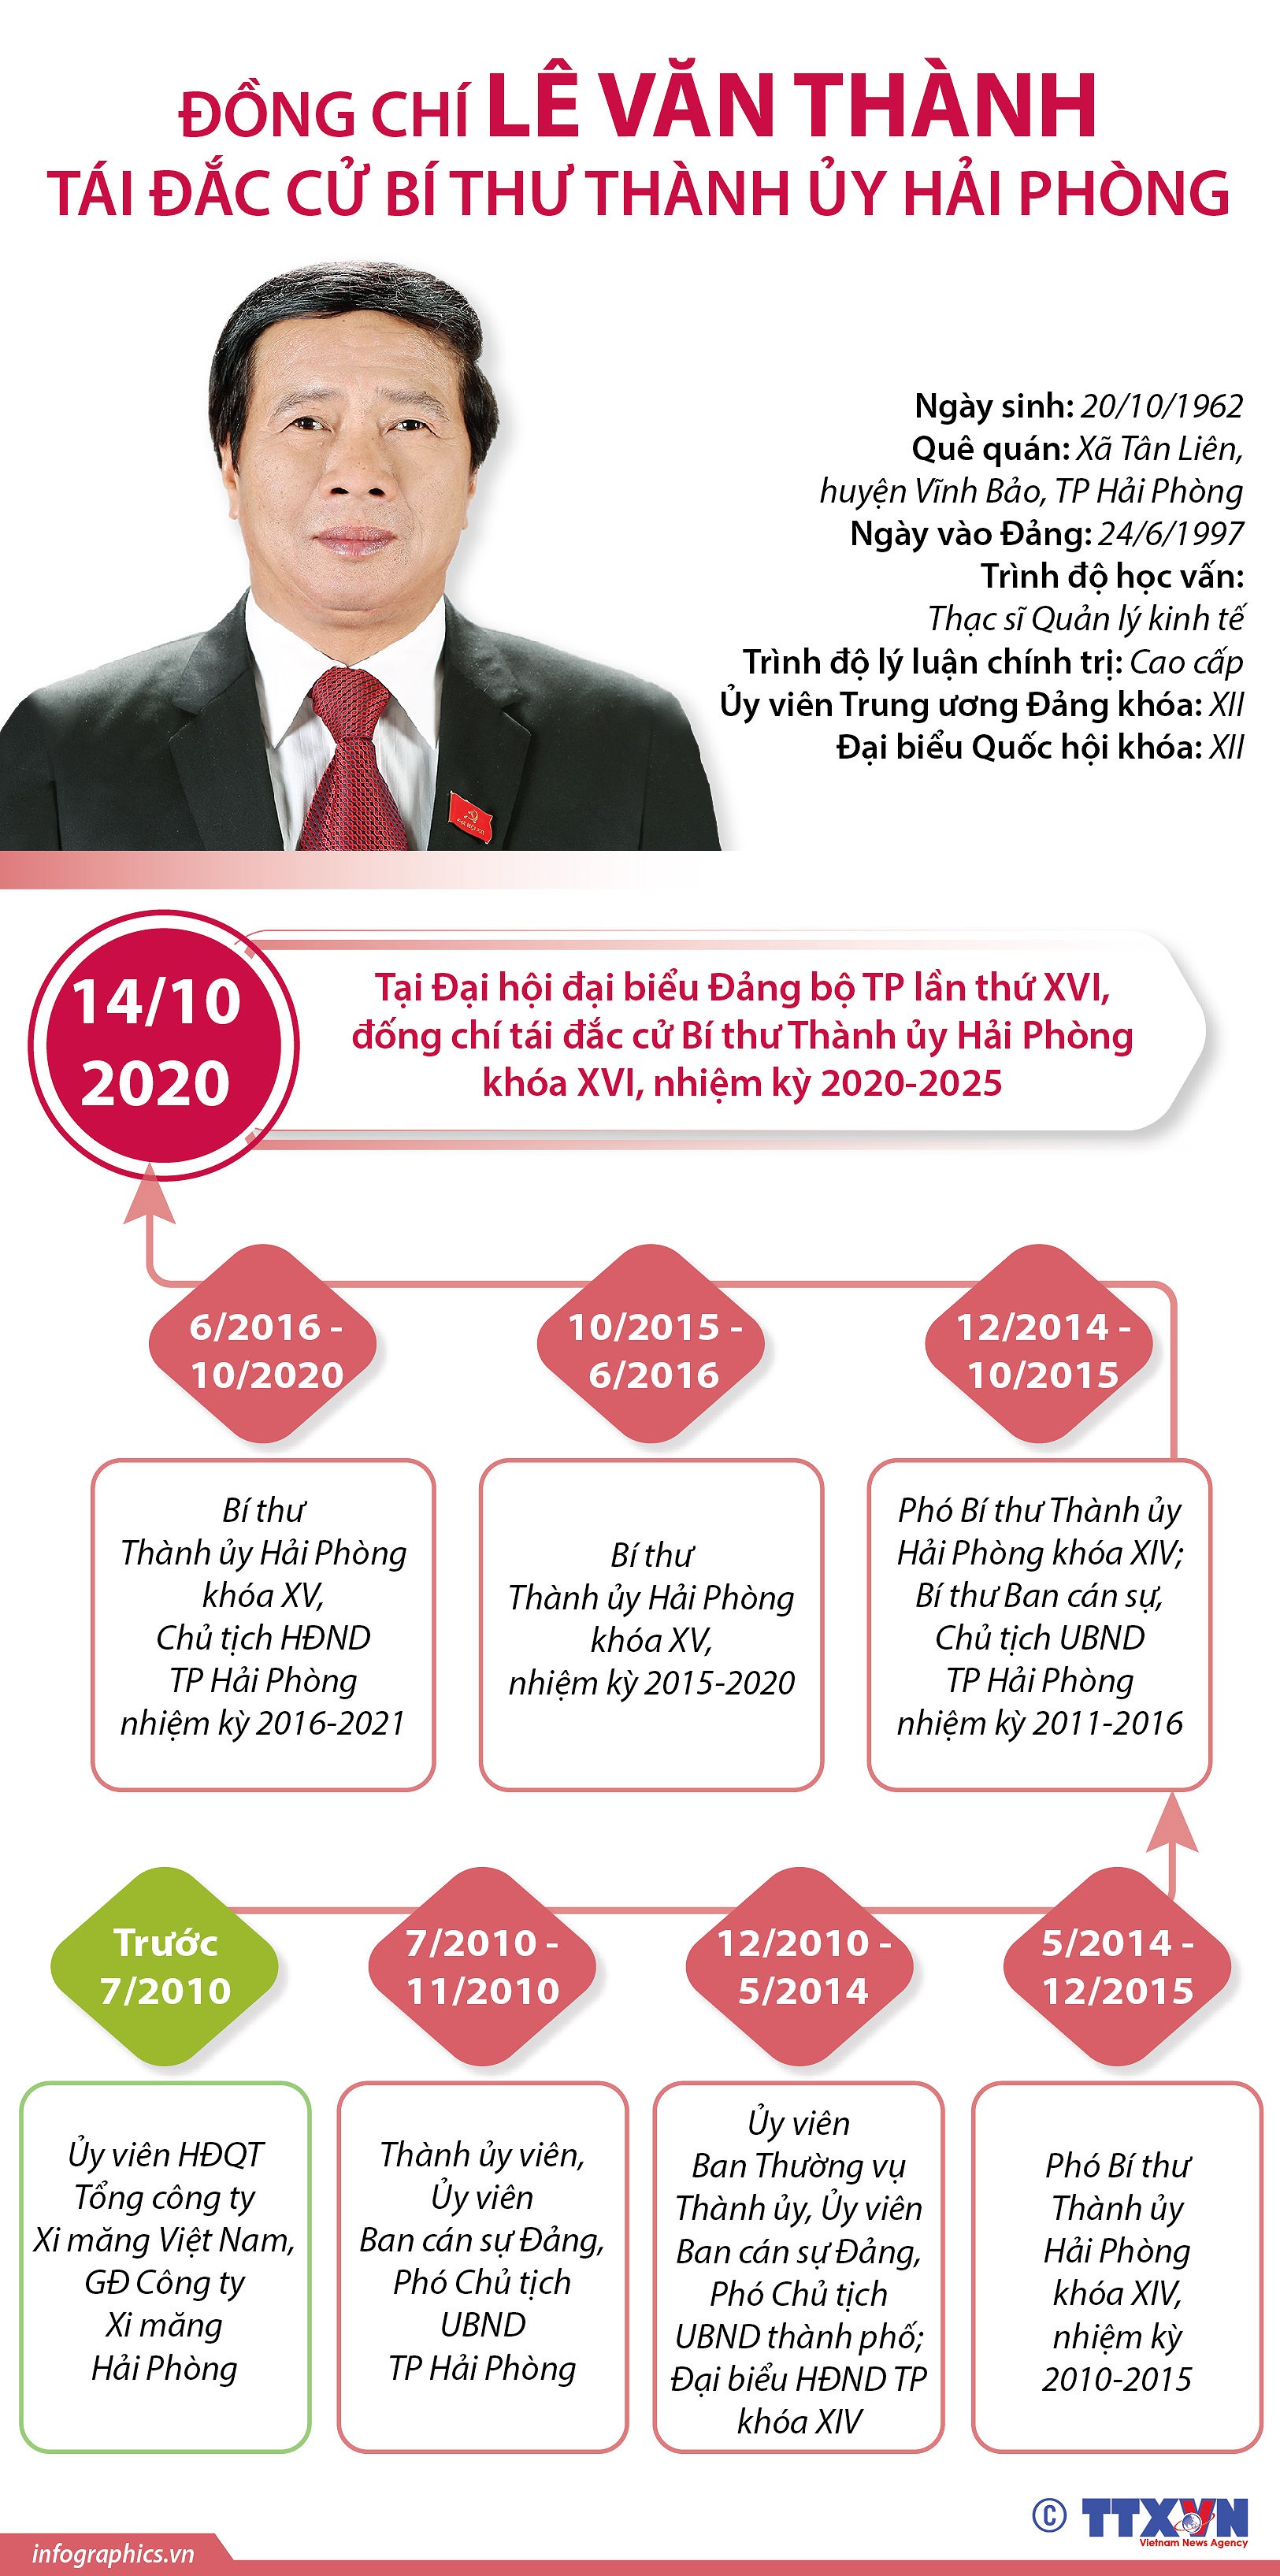 [Infographics] Ong Le Van Thanh tai dac cu Bi thu Thanh uy Hai Phong hinh anh 1